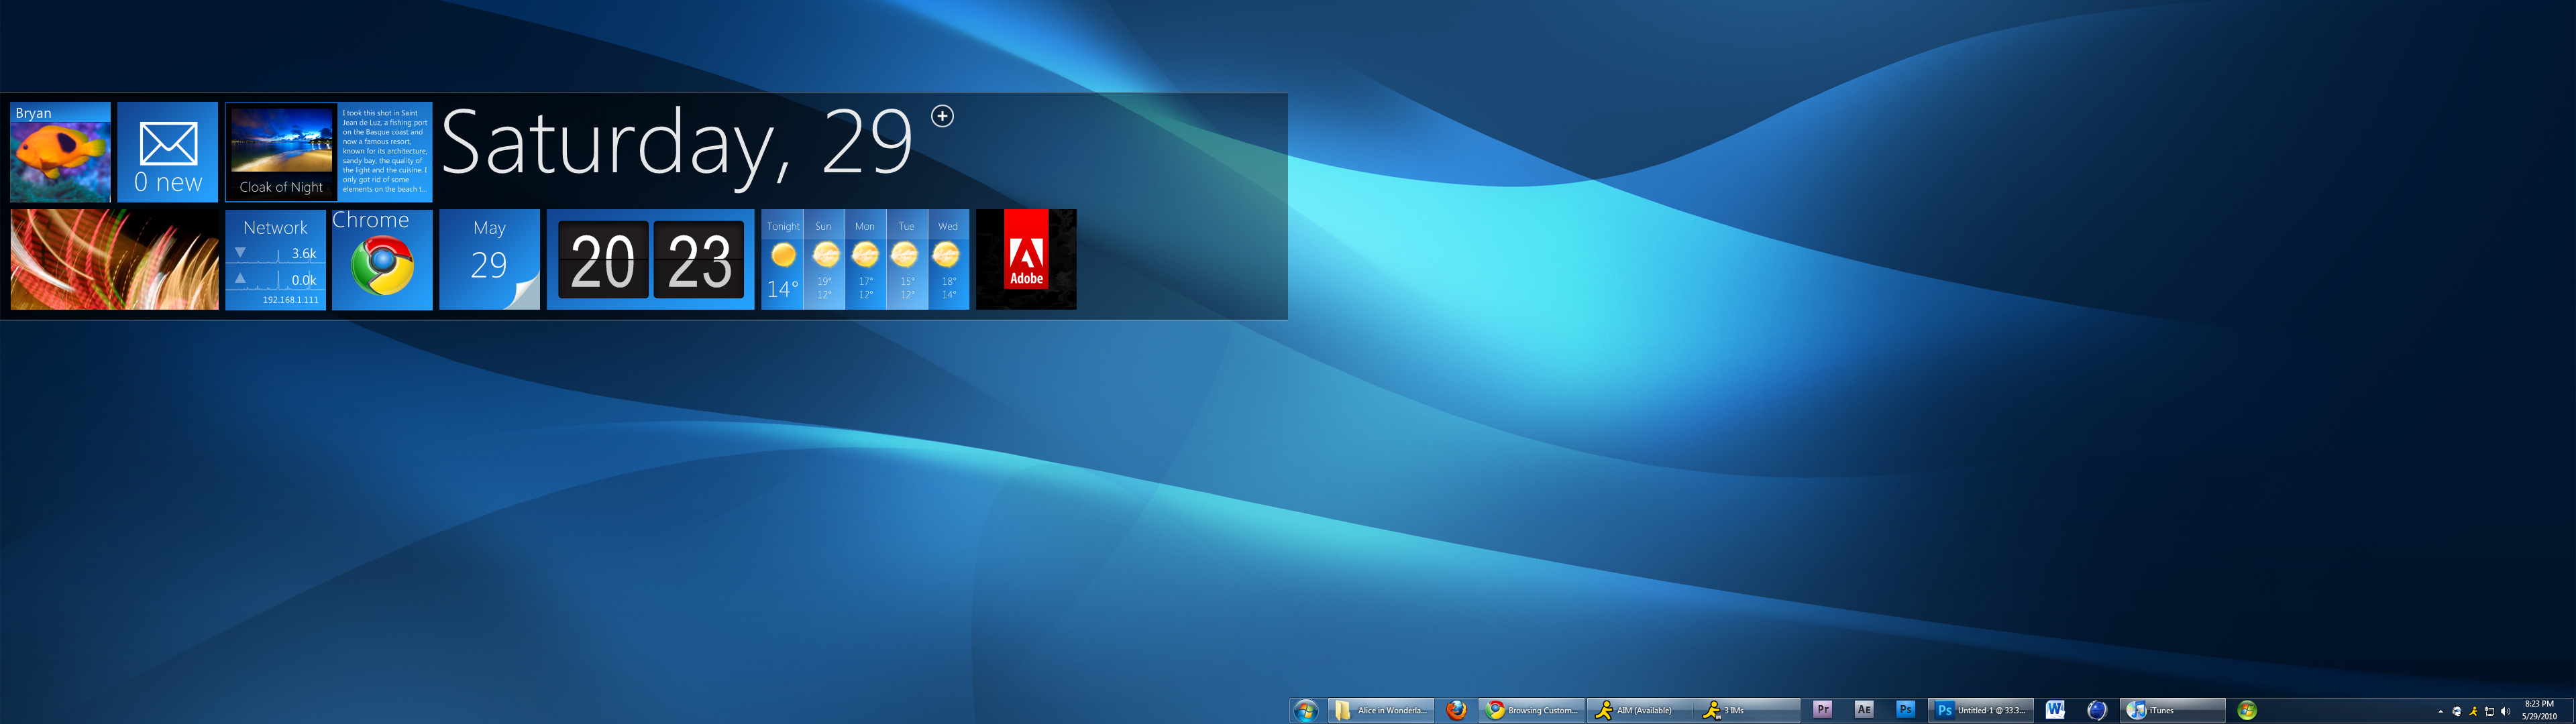 windows 7 multiple desktop backgrounds multiple monitors 3840x1080